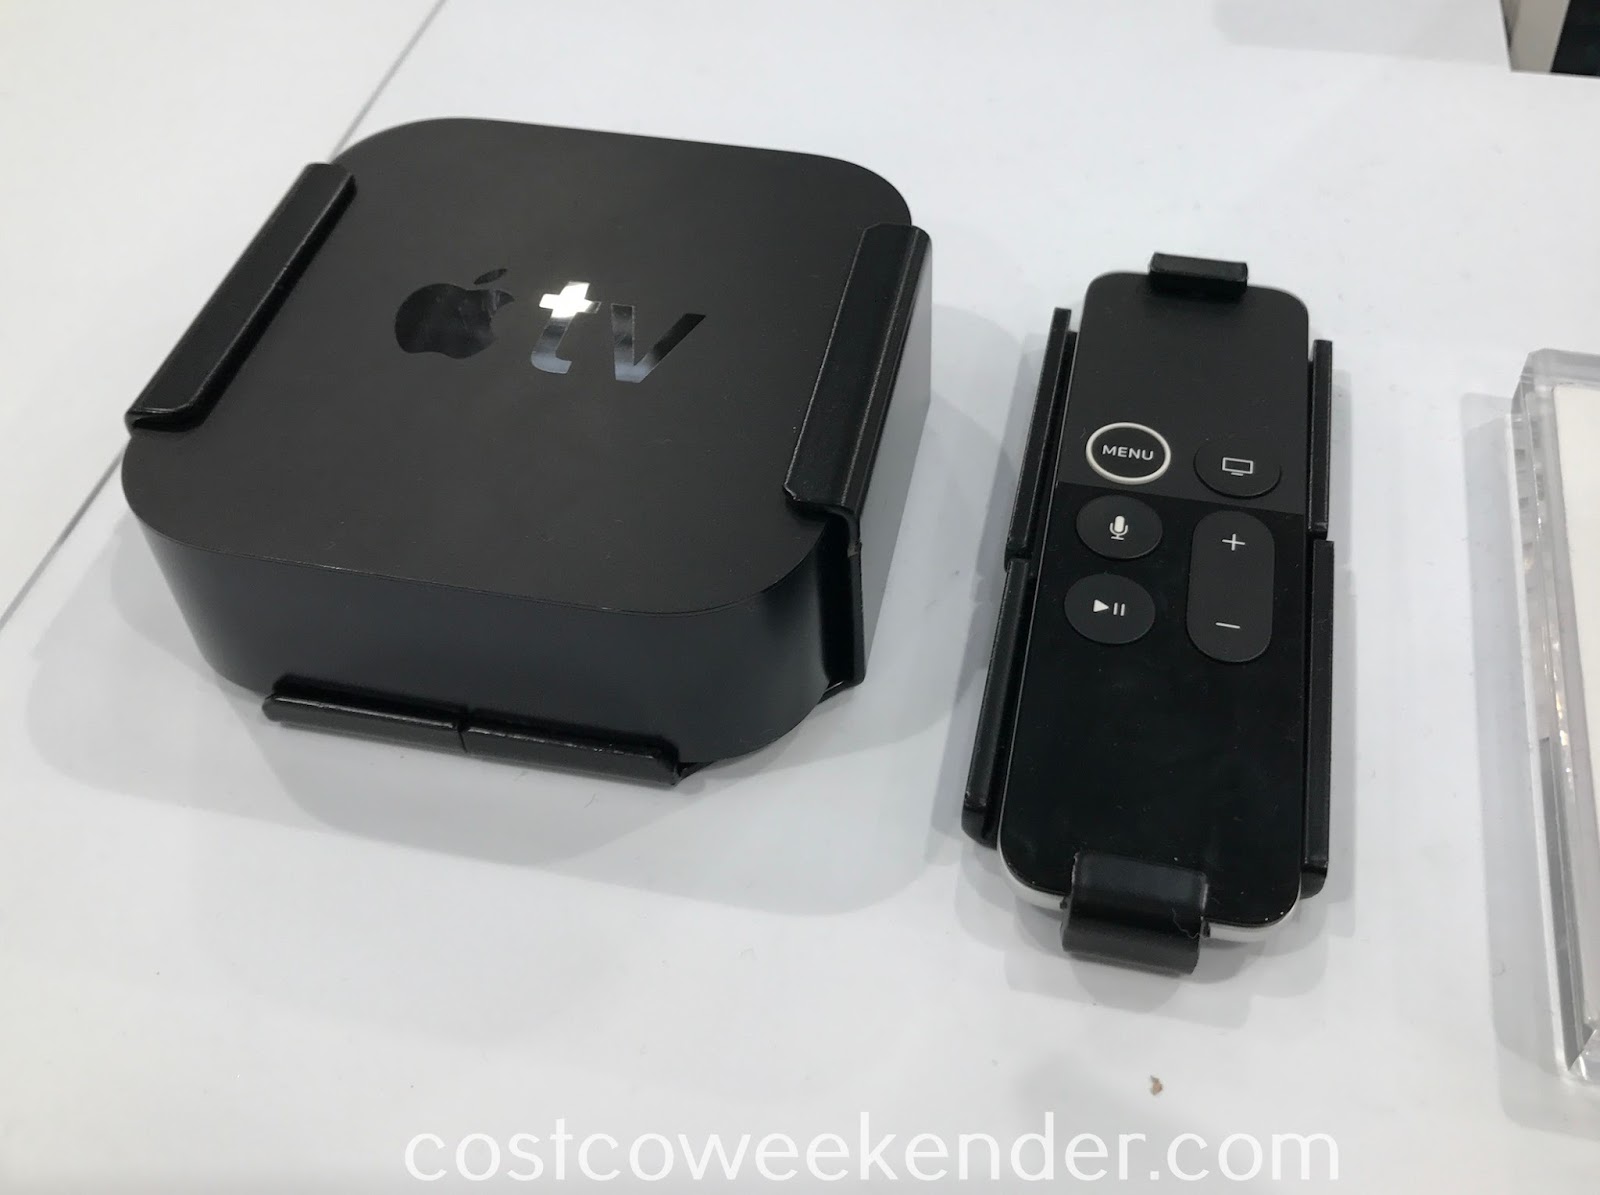 Apple TV 4K 32GB (MQD22LL/A) | Costco Weekender